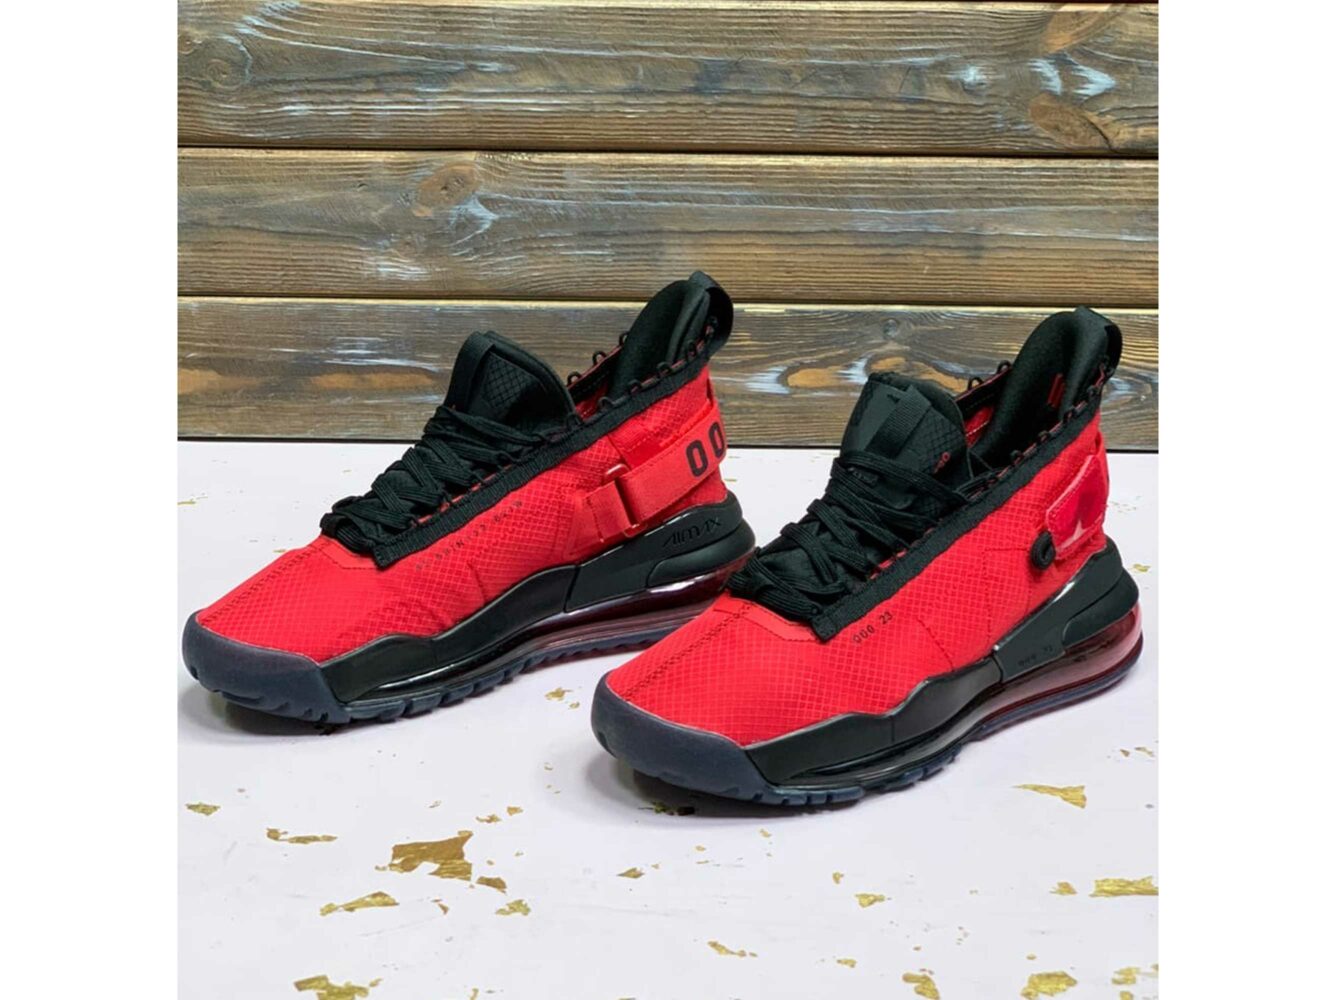 Jordan proto max 720 red black BQ6623_600 купить